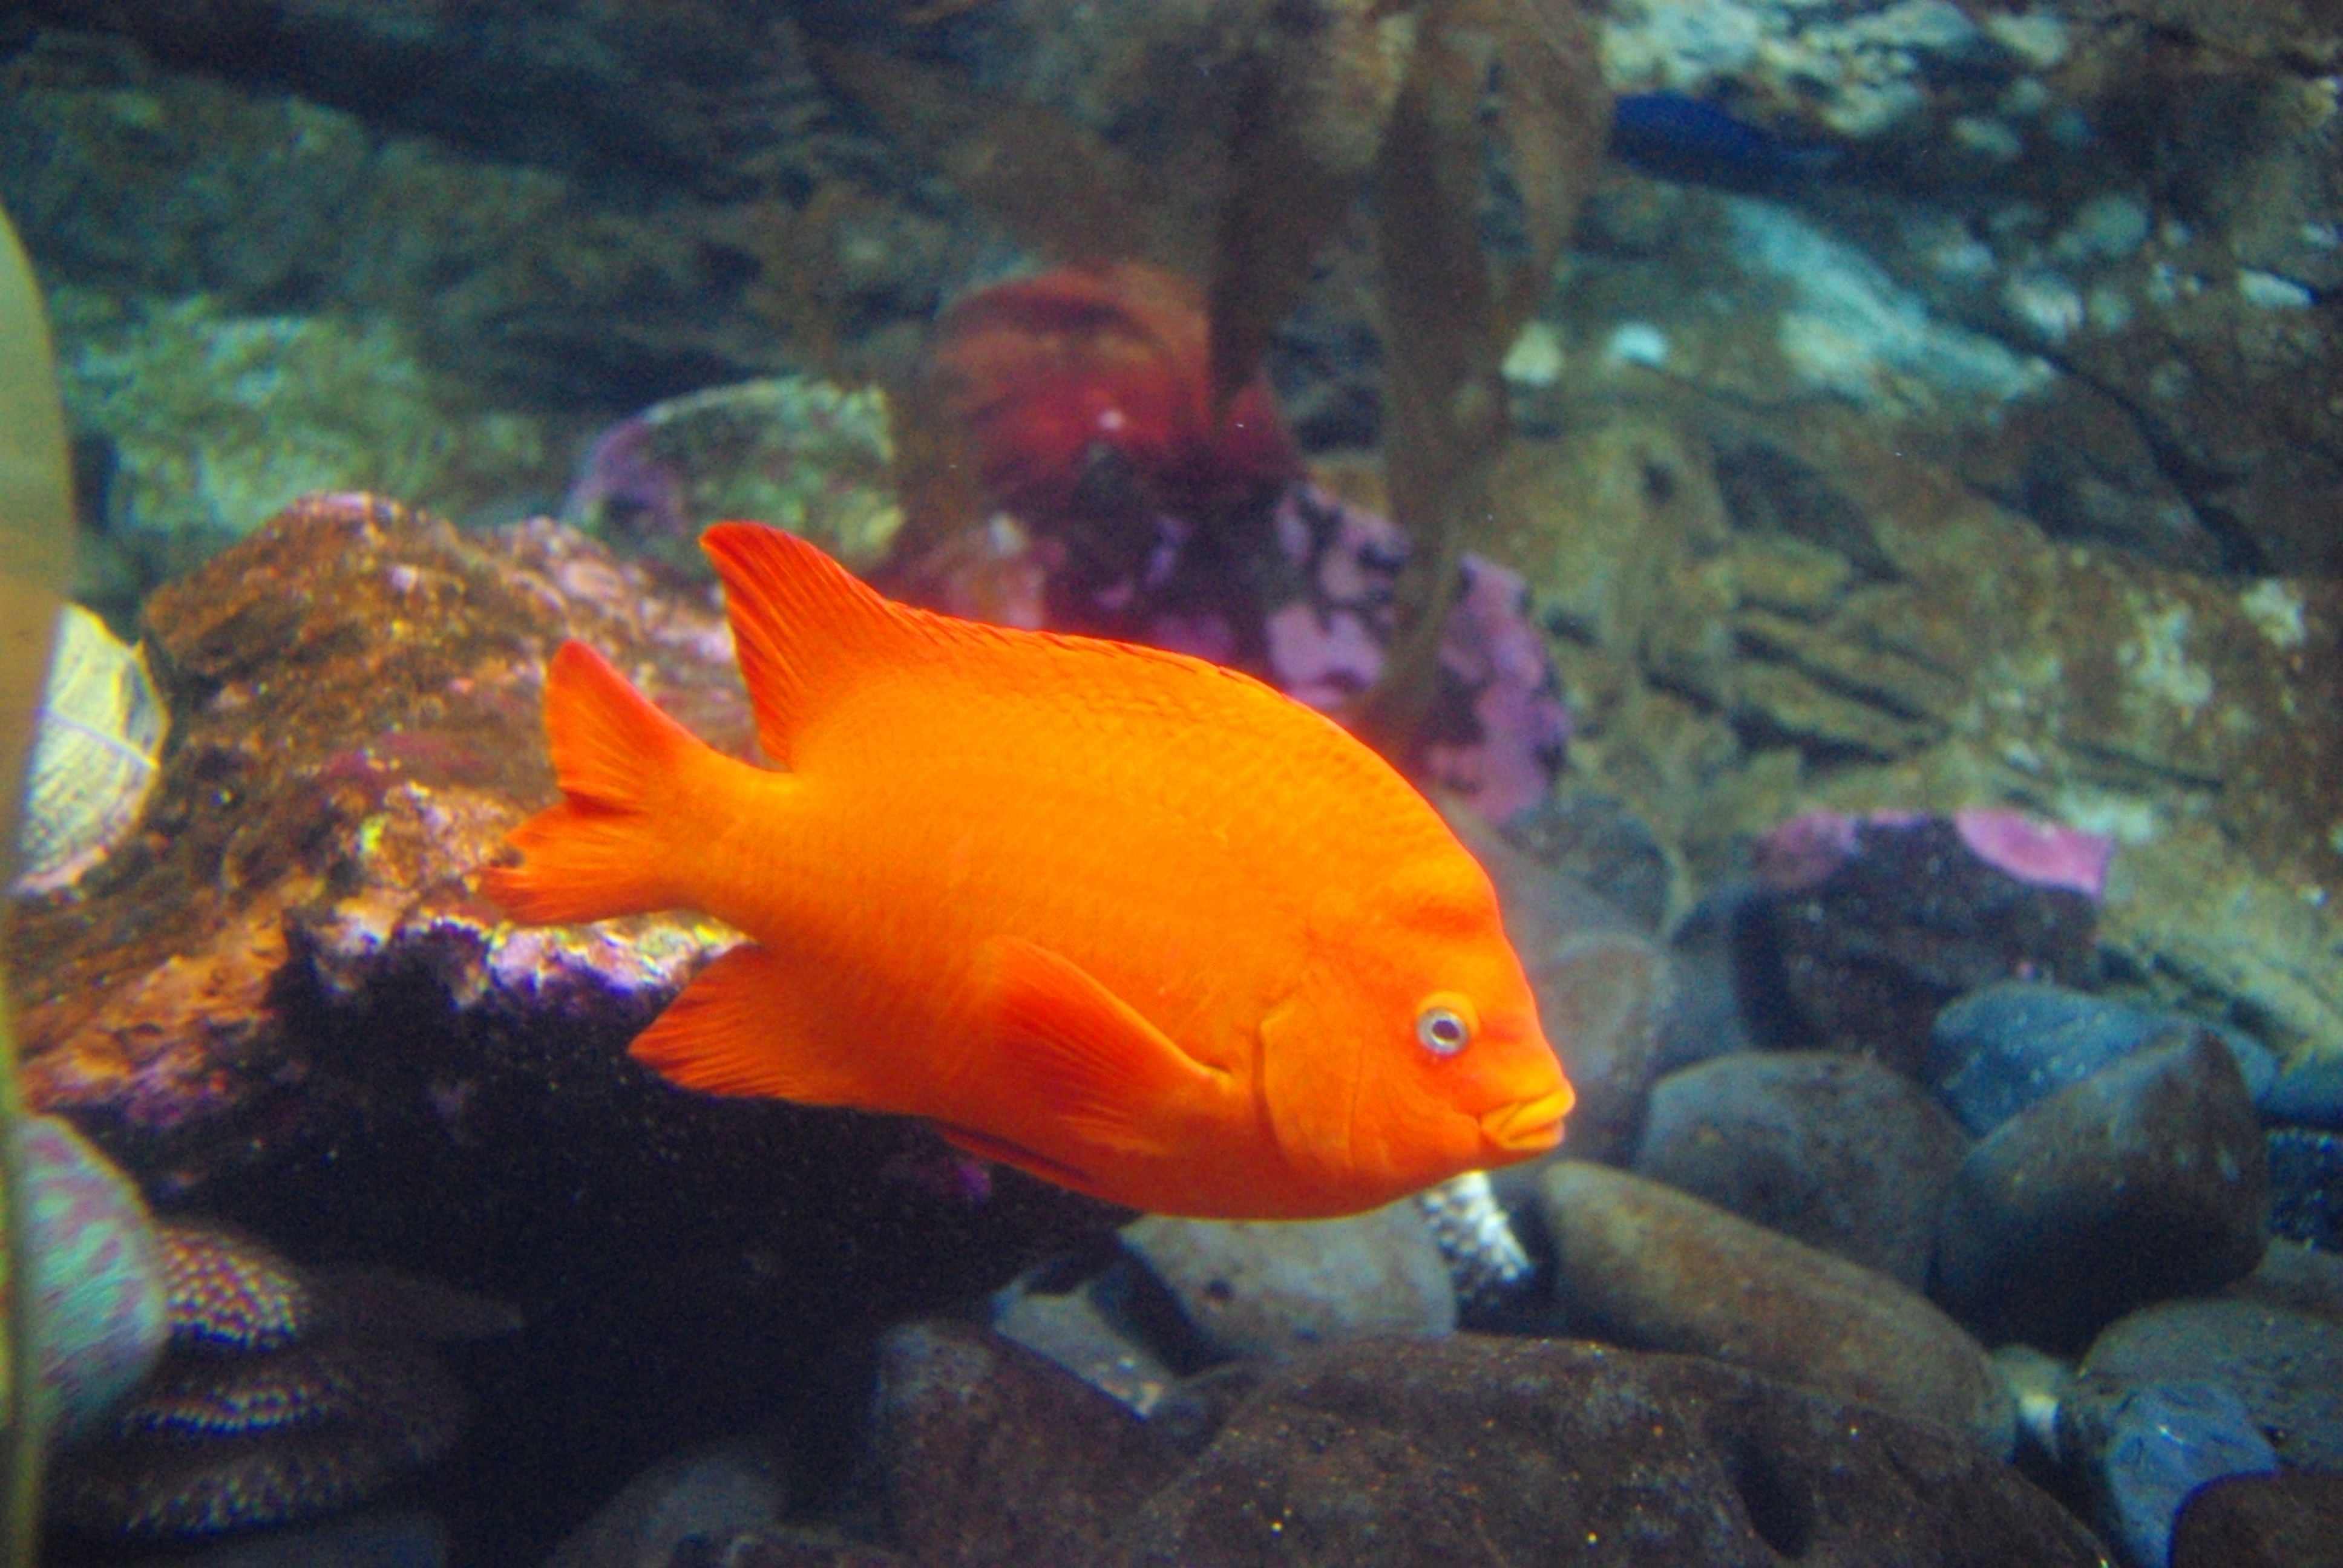 Bright orange fish photo